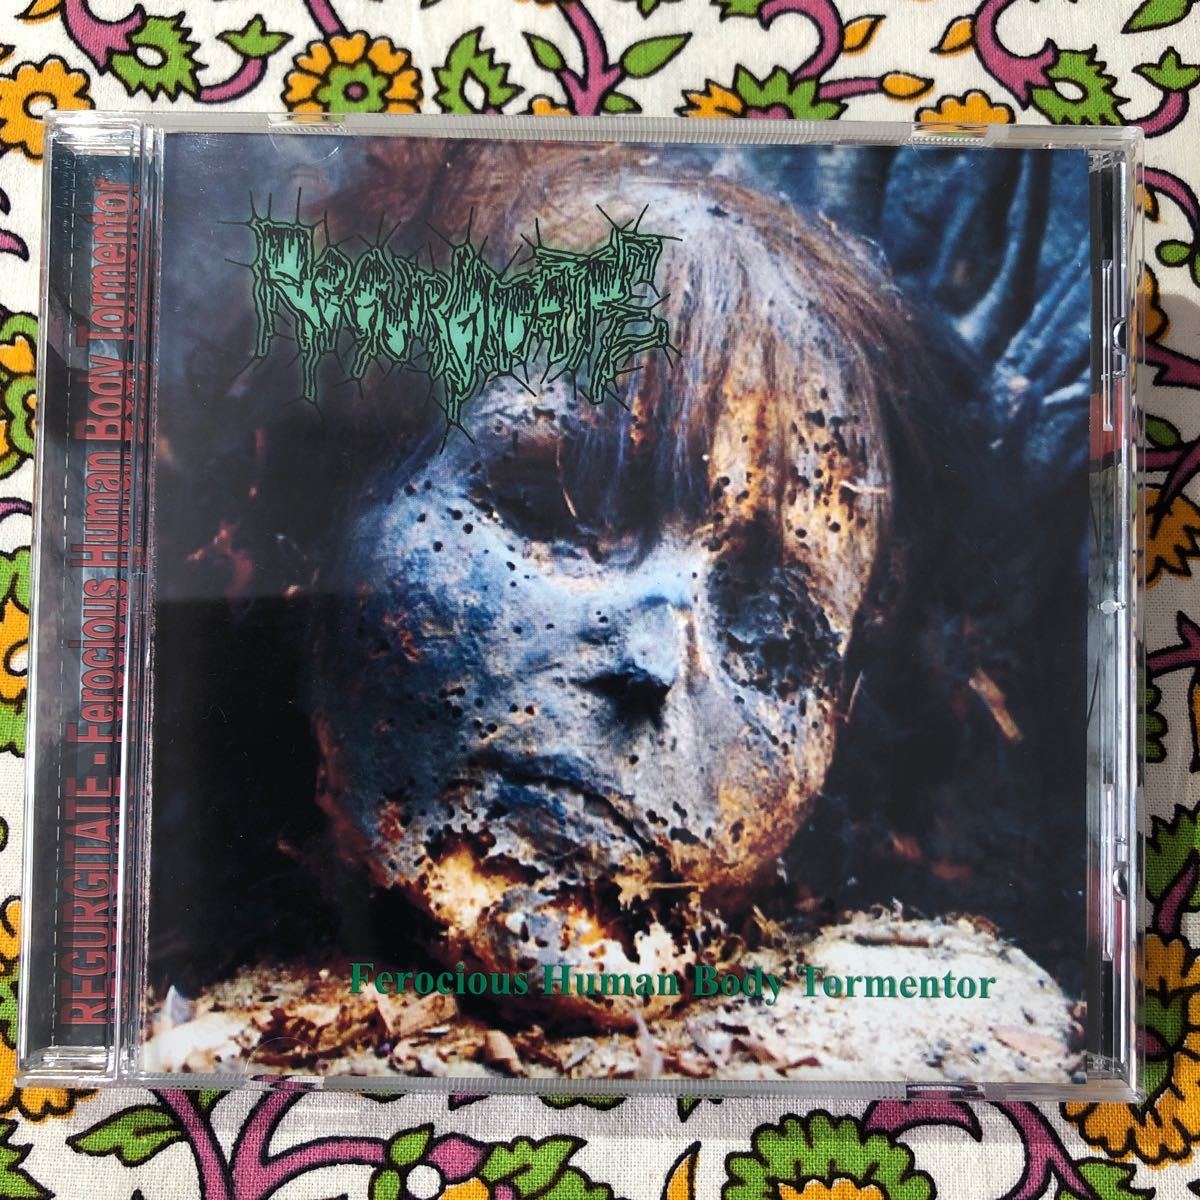 REGURGITATE - Ferocious Human Body Tormentor【CD】ゴアグラインド グラインド death grind gore_画像1